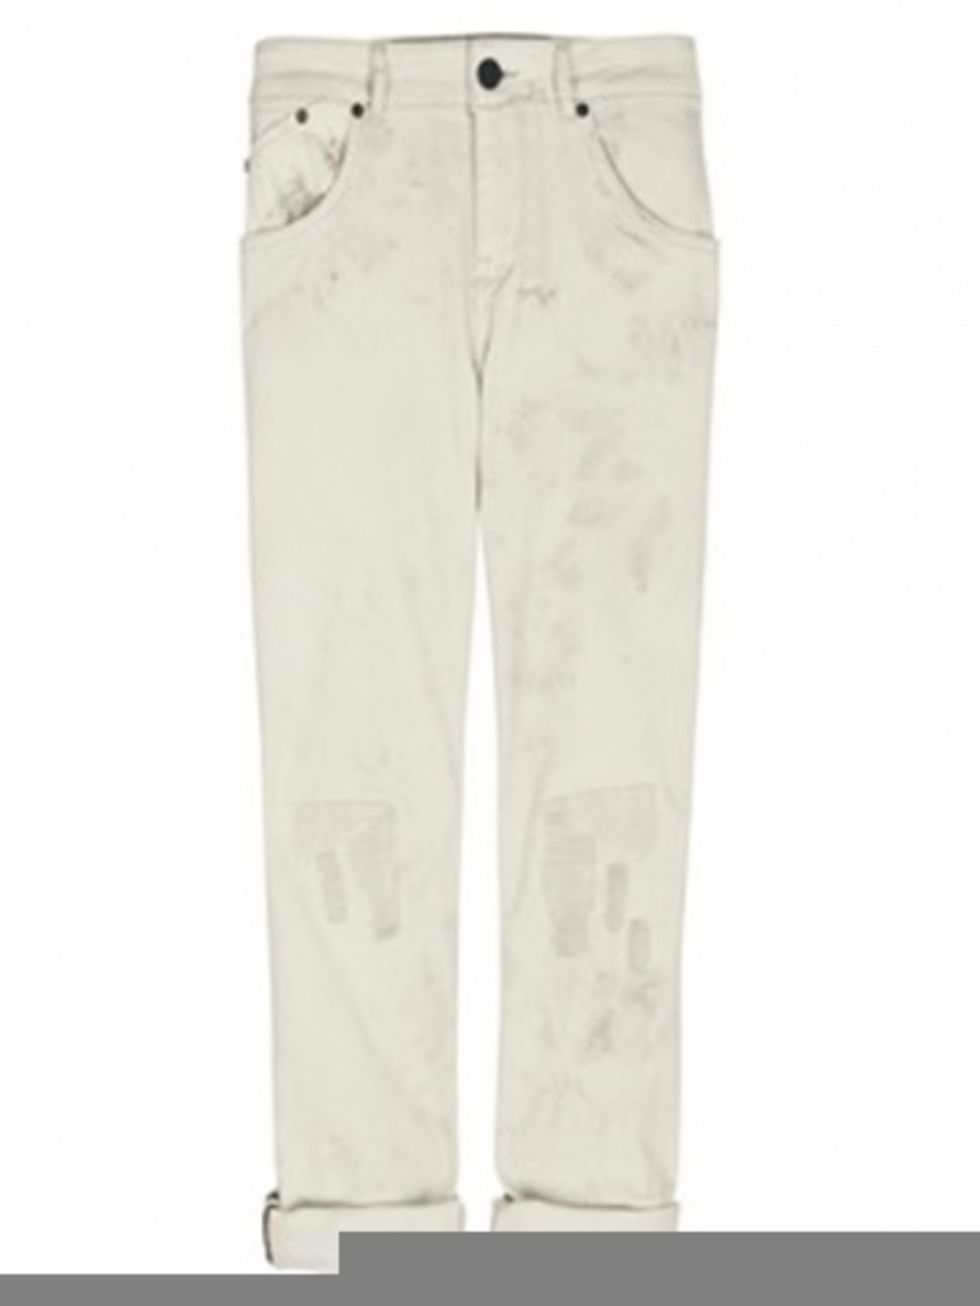 White, Pocket, Khaki, Beige, Ivory, Button, Bermuda shorts, Fashion design, Silver, Suit trousers, 